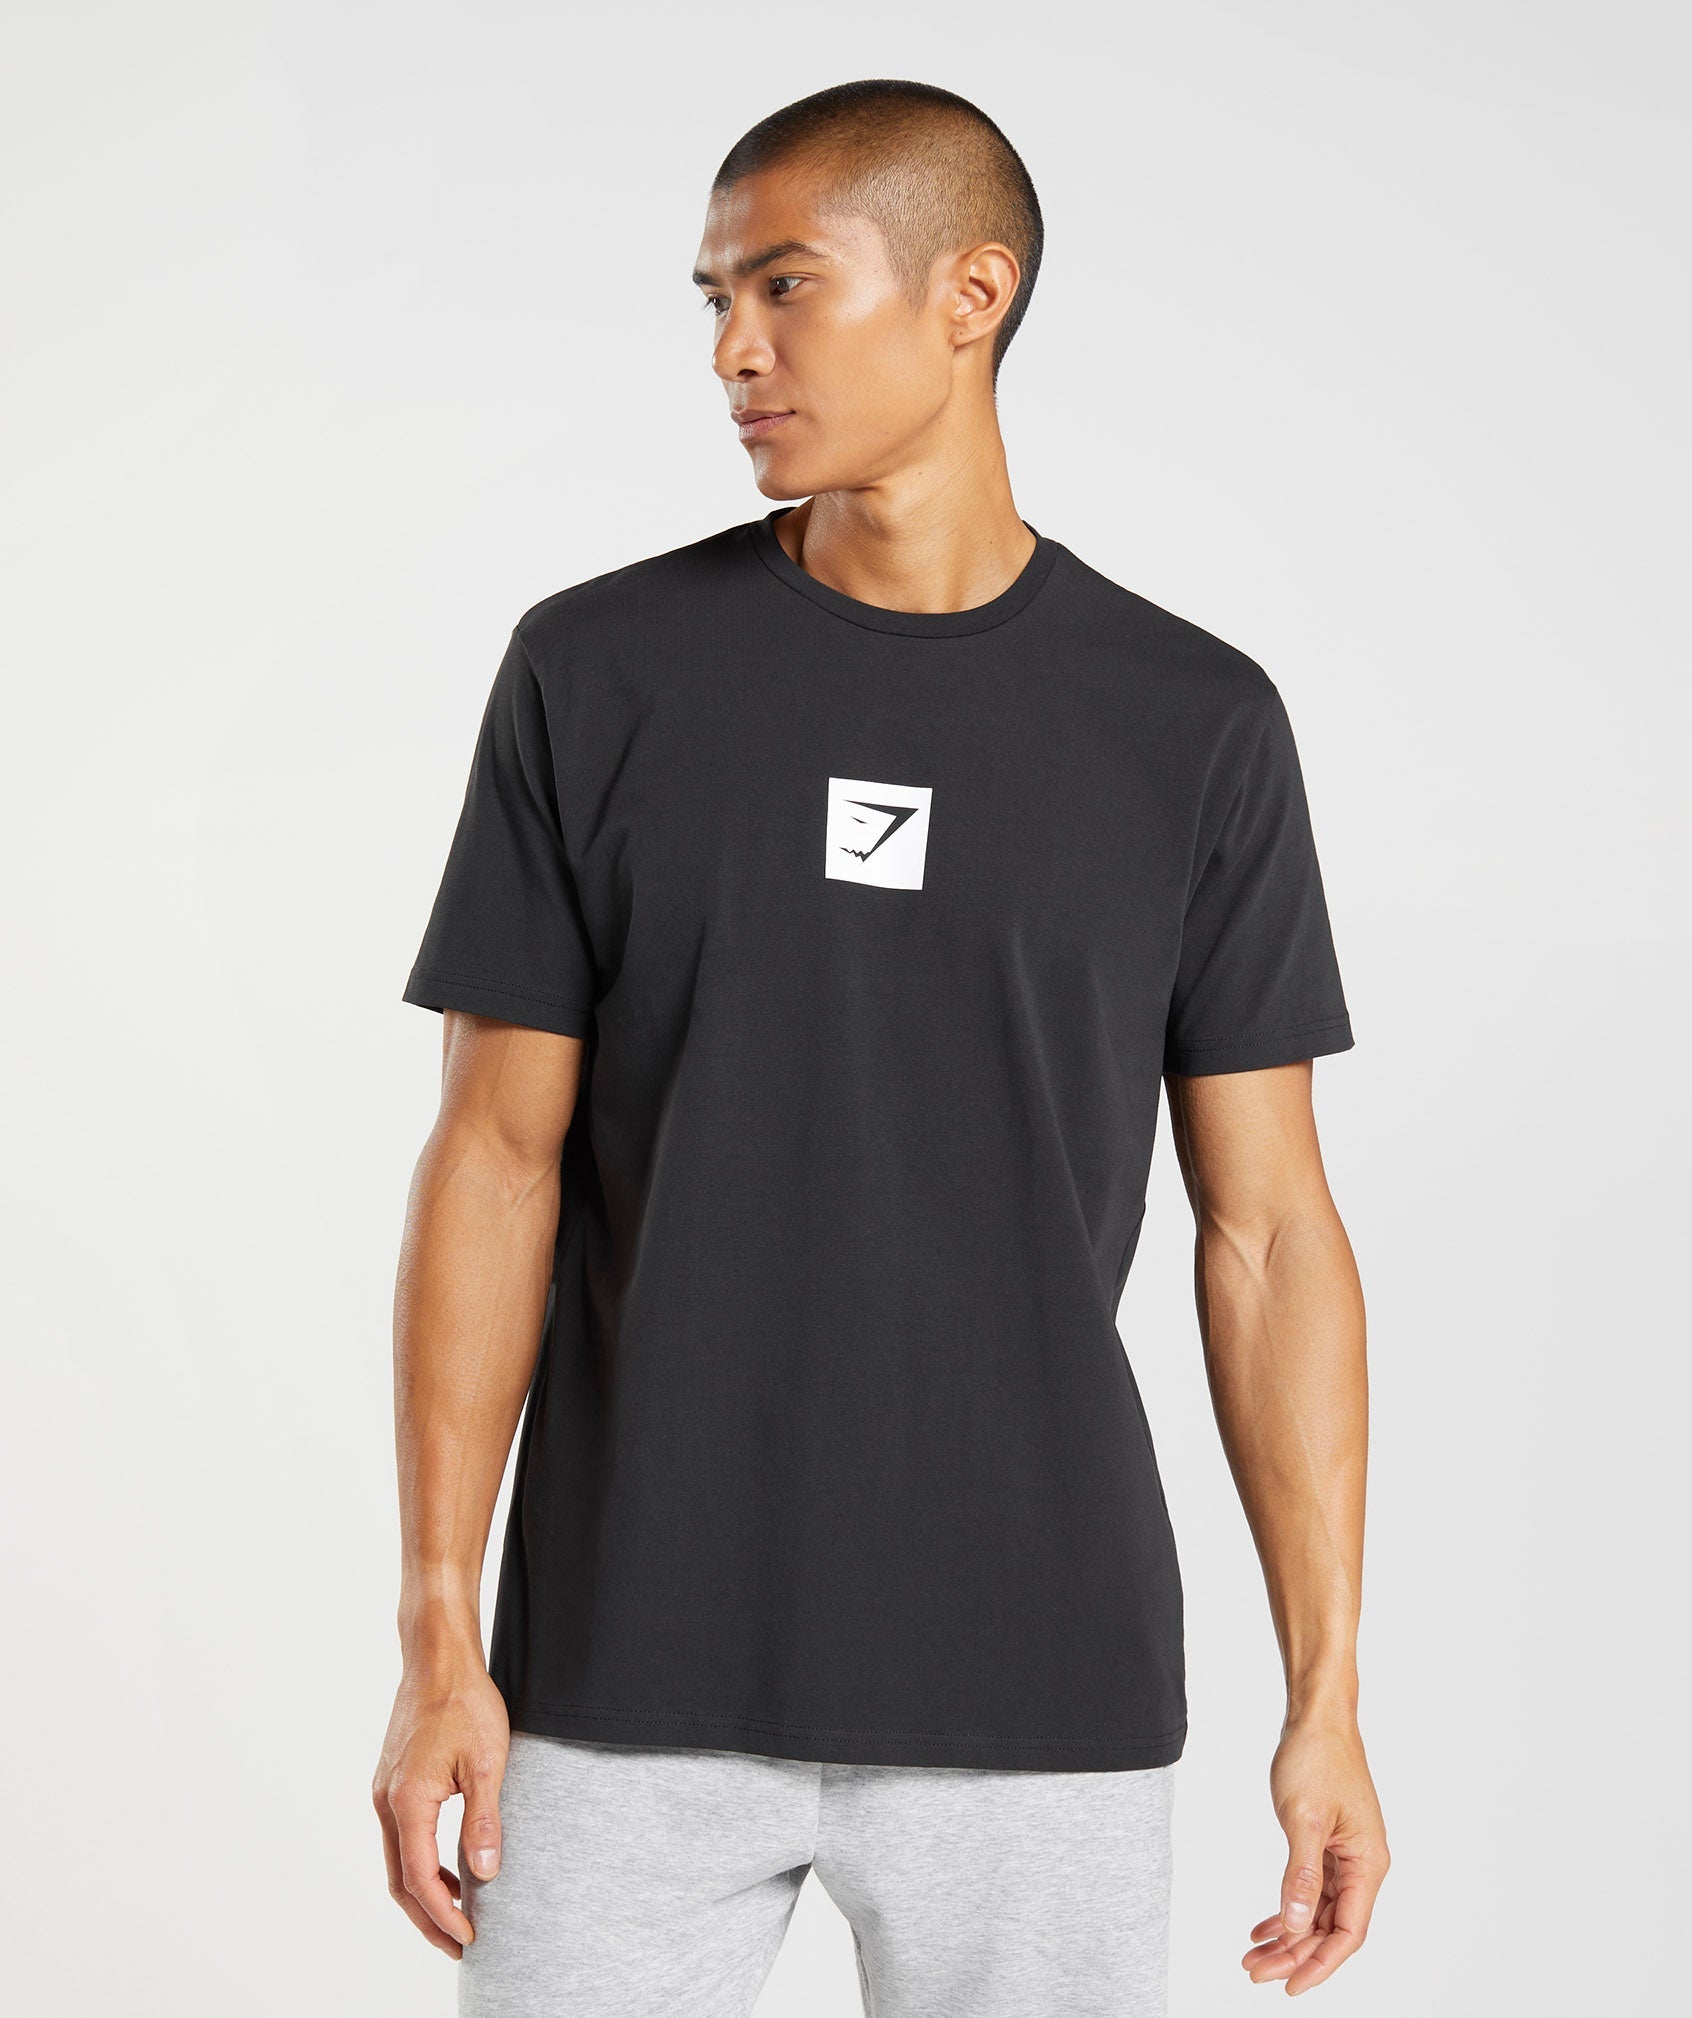 Outline T-Shirt in Black